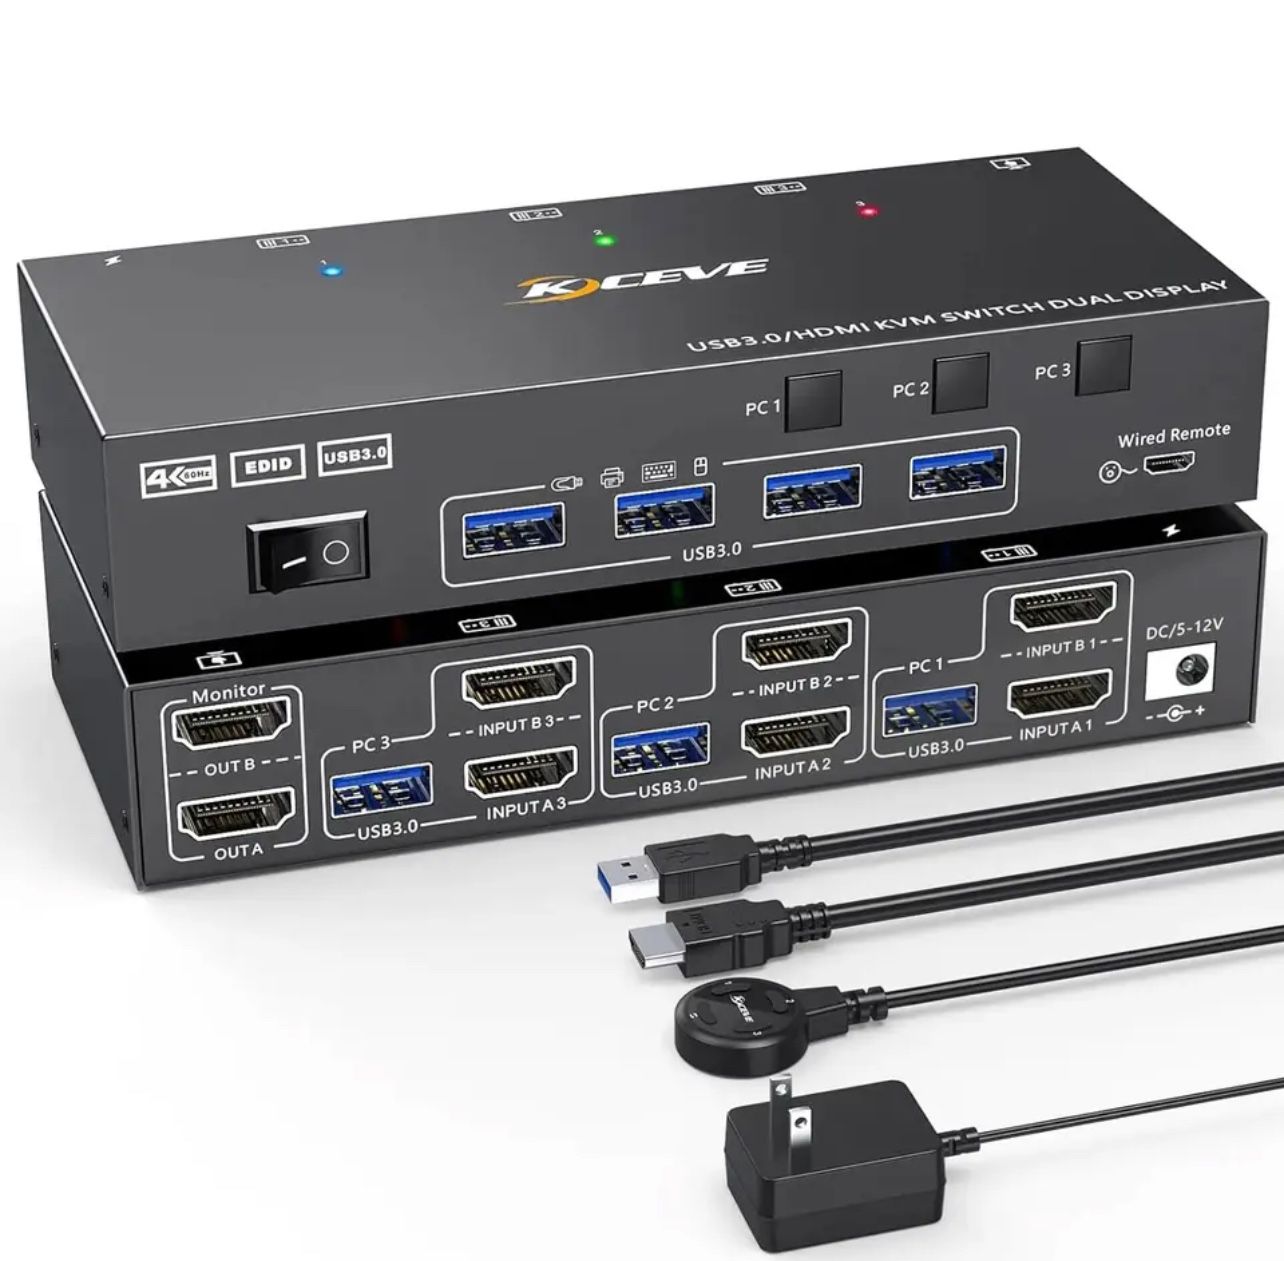  Dual Monitor KVM Switch USB 3.0 HDMI KVM Switch 2 Monitors 3 Computers, EDID Emulator,4K@60Hz 2K@144Hz with 4 USB 3.0 Ports